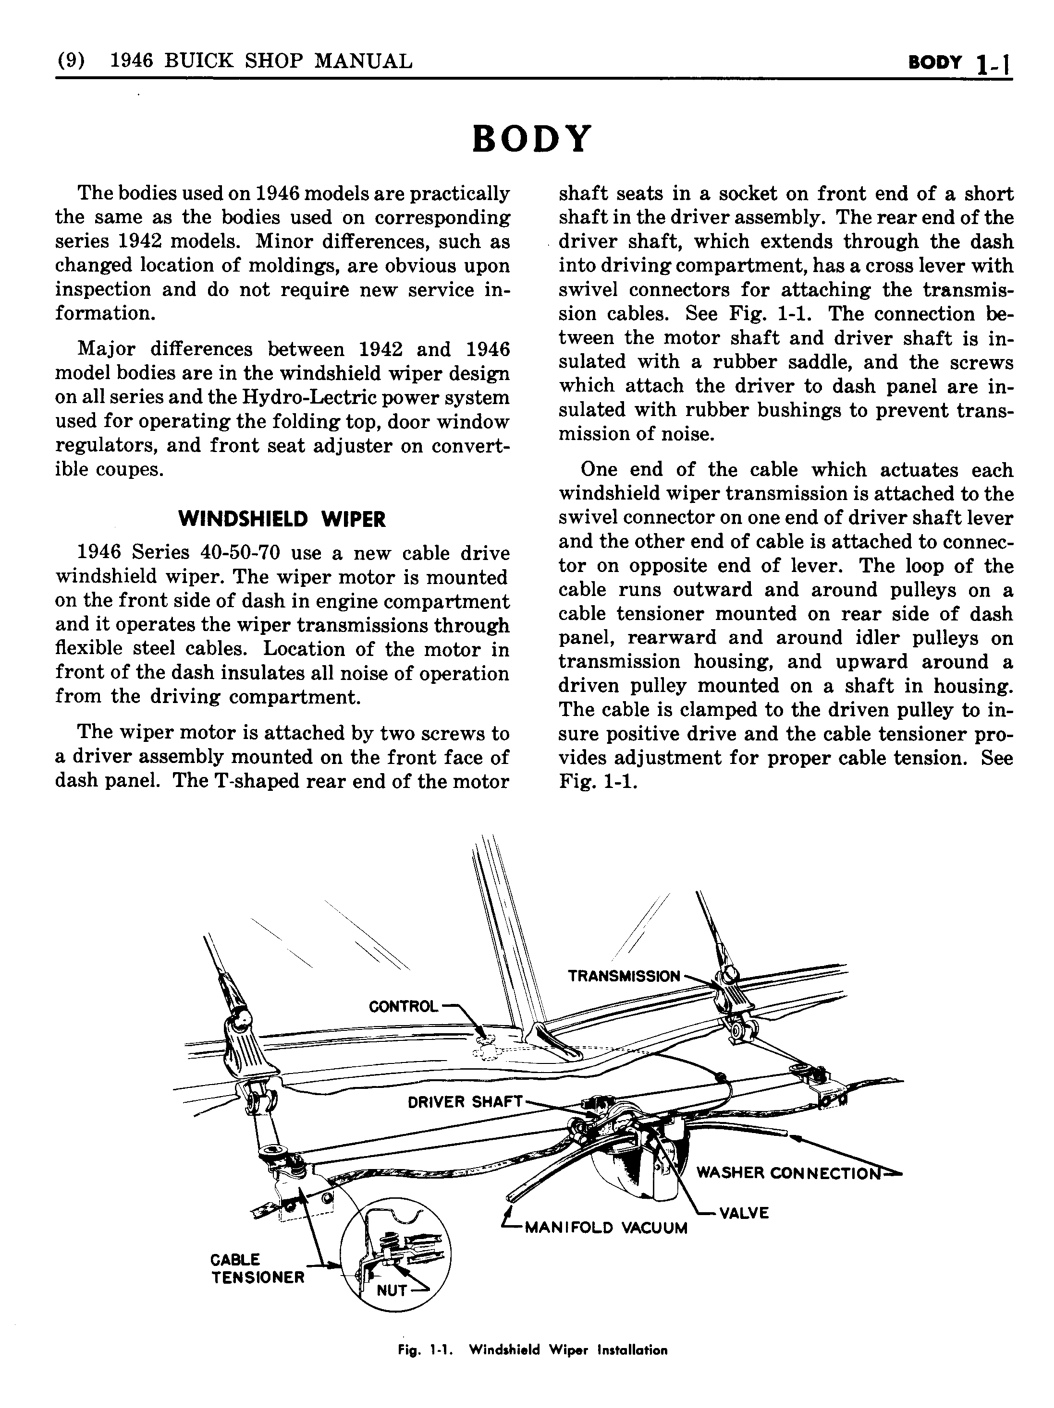 n_02 1946 Buick Shop Manual - Body-001-001.jpg